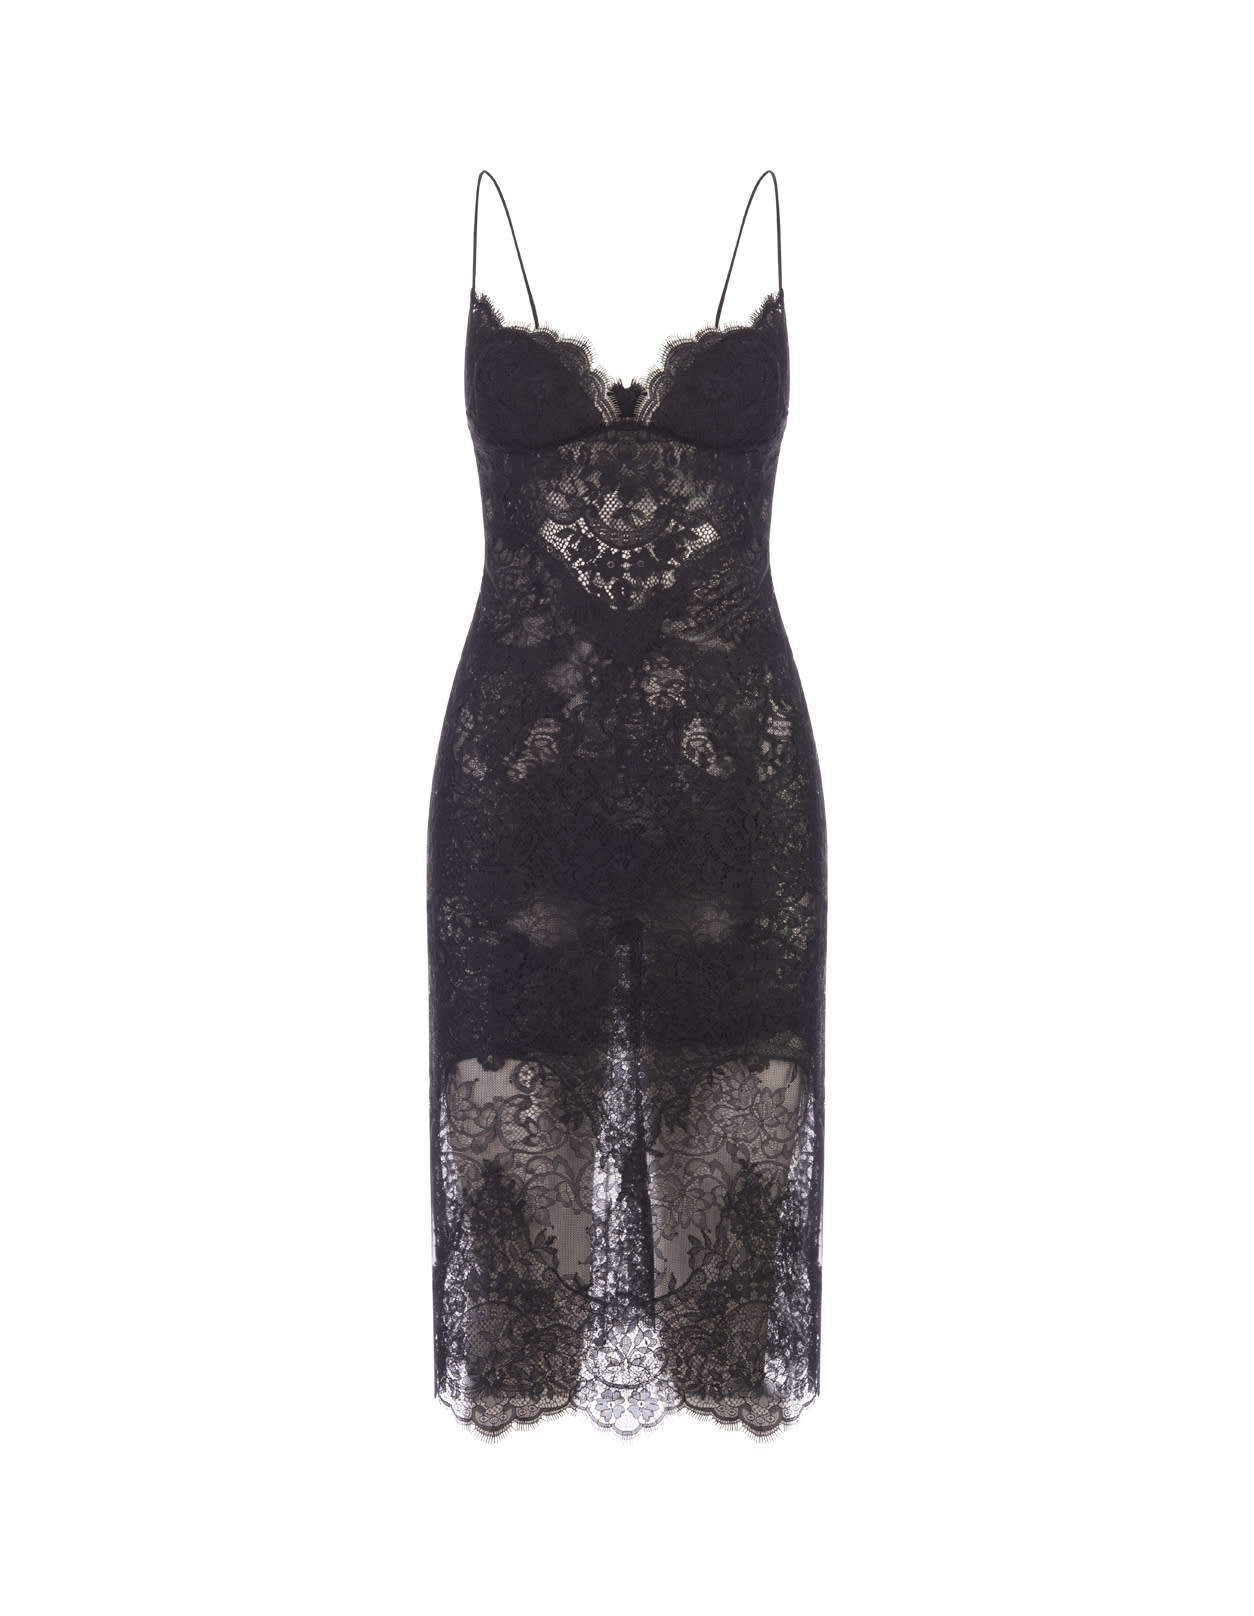 All-over Black Lace Lingerie Dress